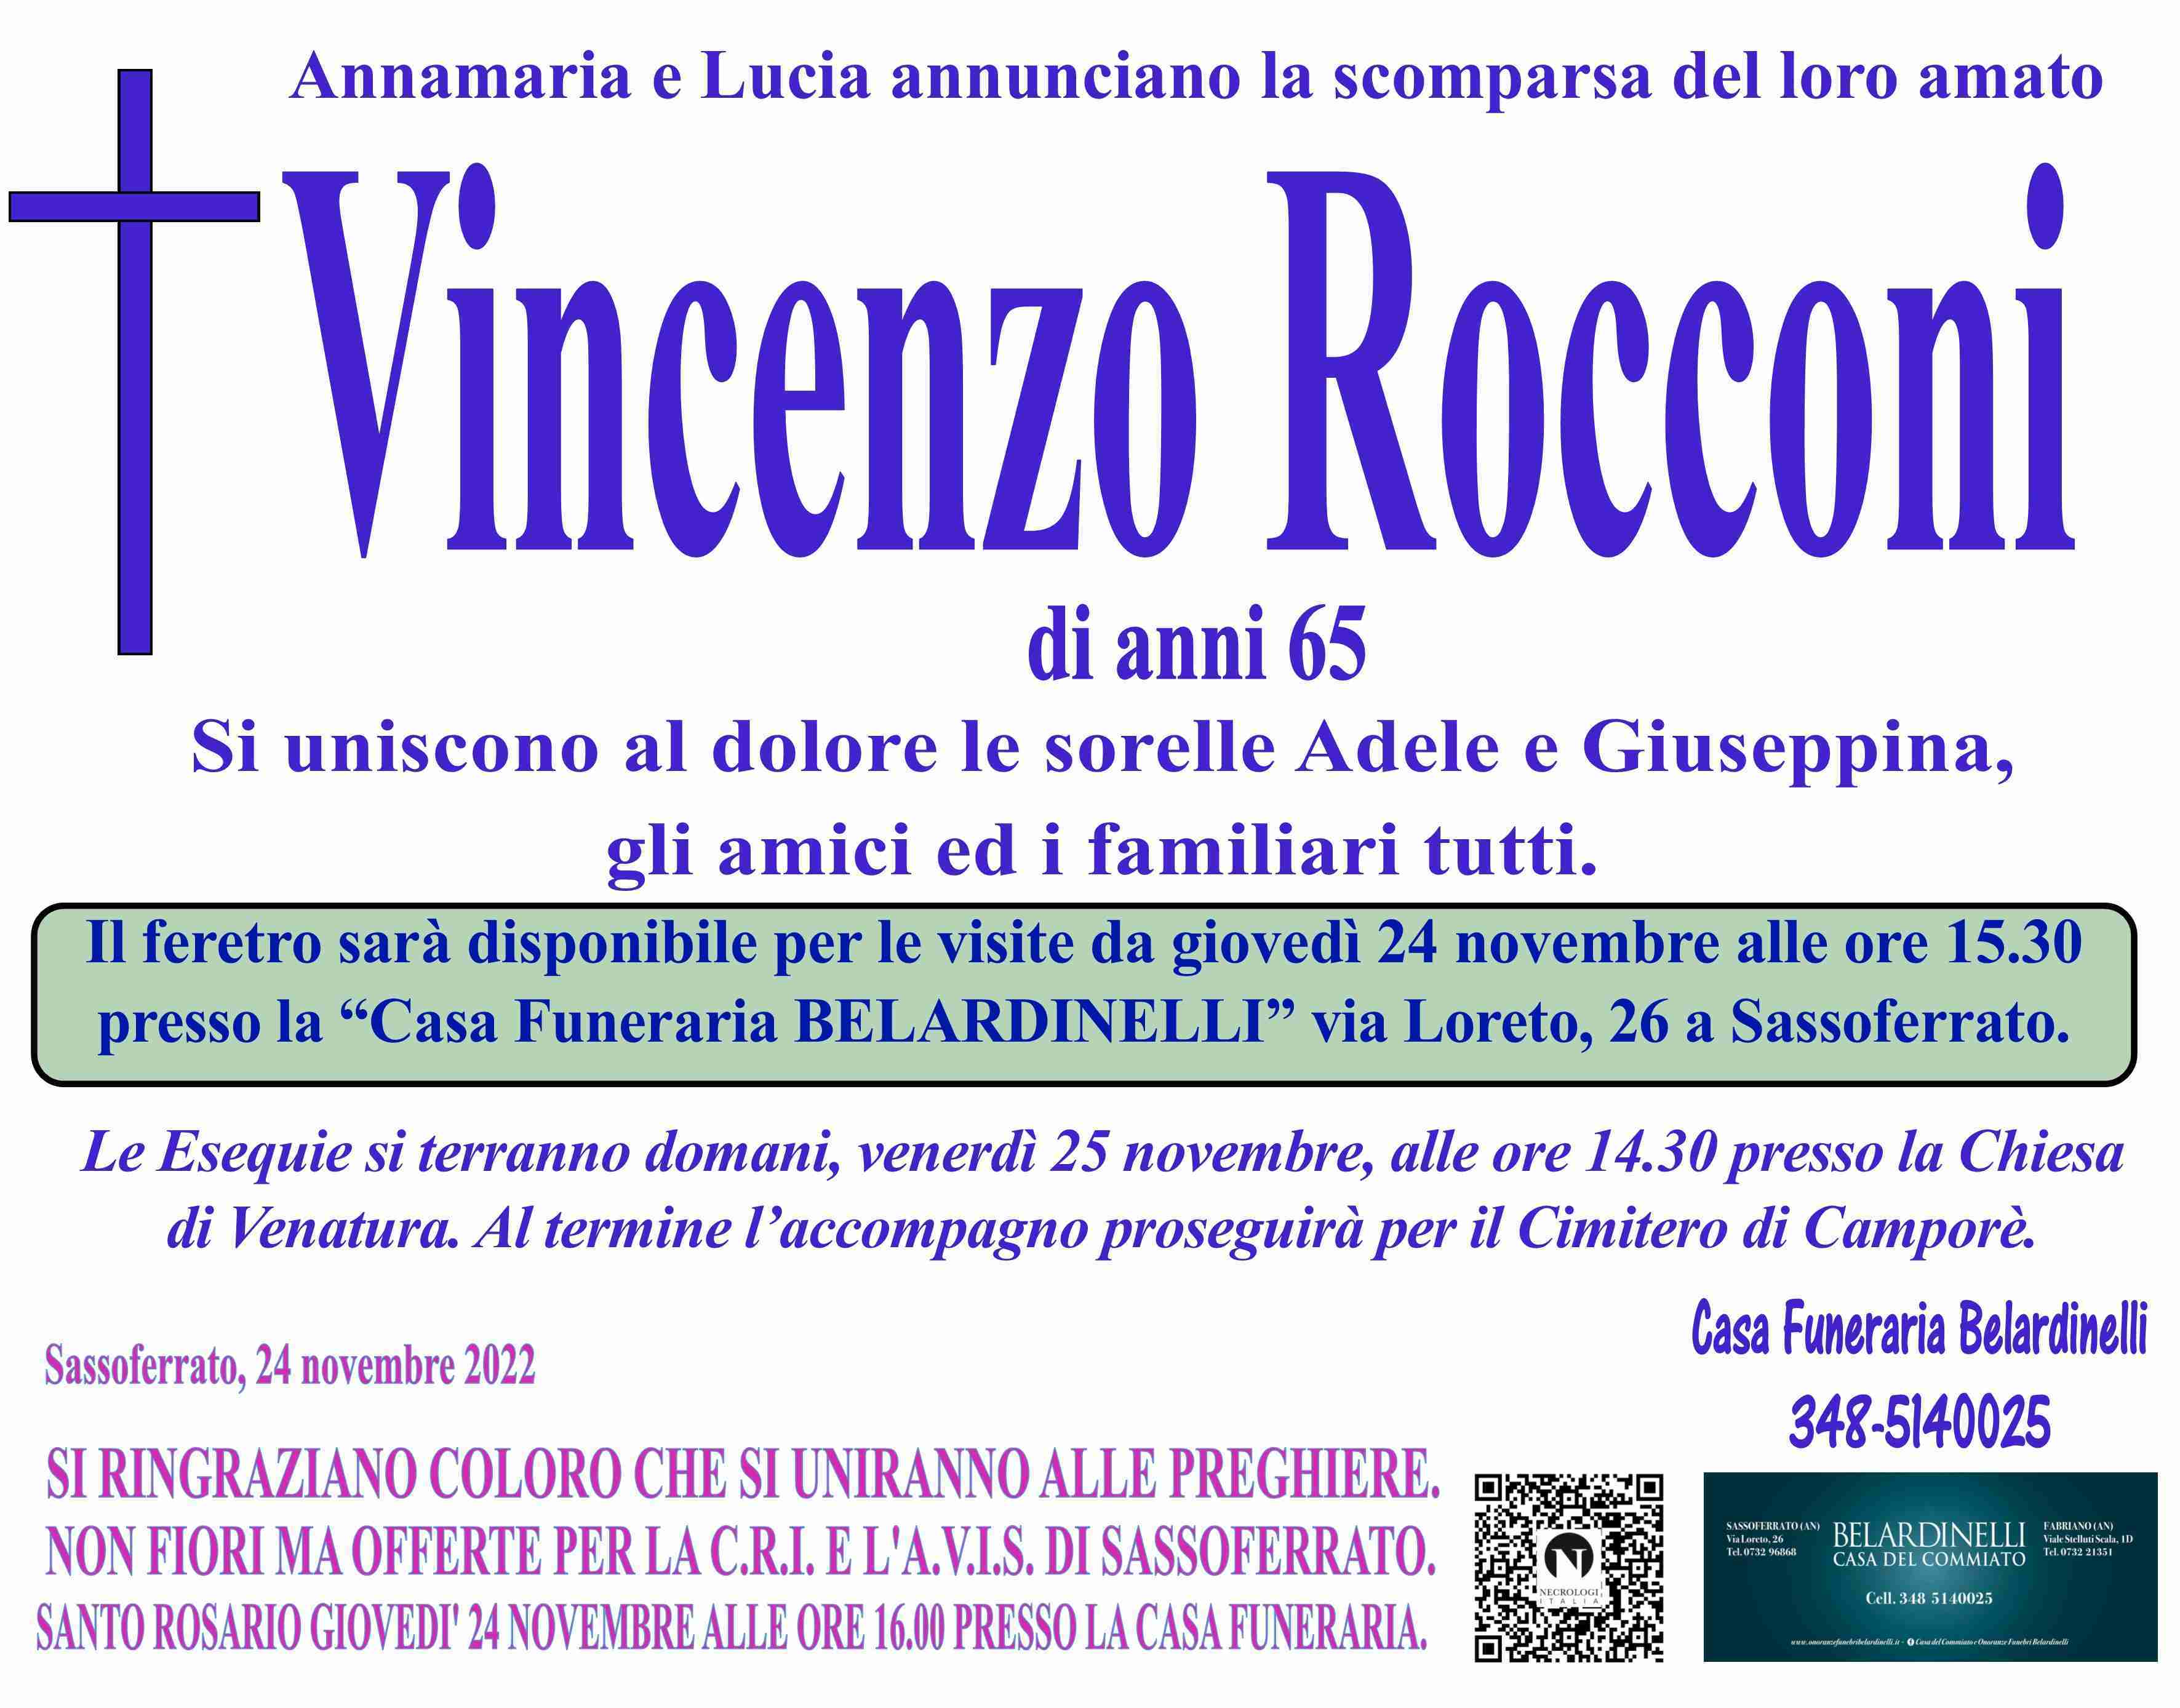 Vincenzo Rocconi